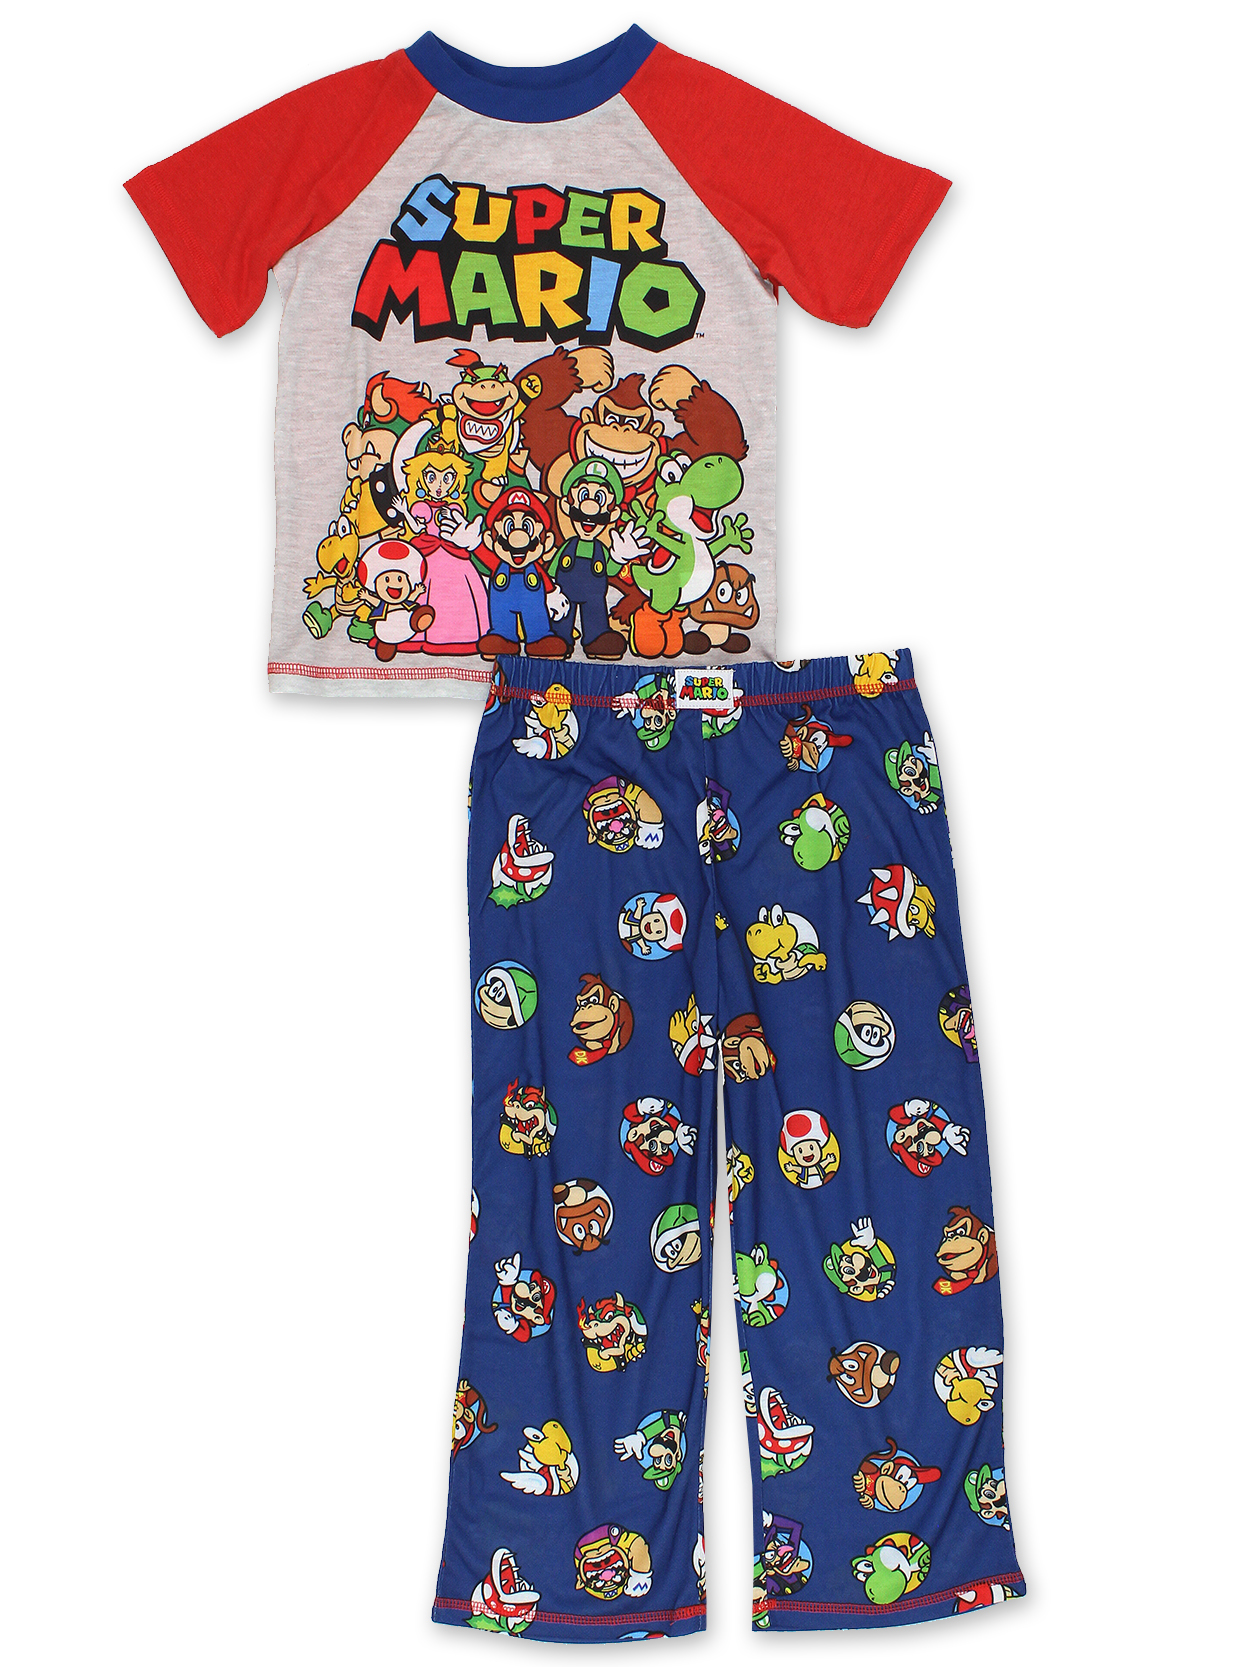 Boys Small 6-7 Mariokart Super Mario Pajamas Short Sleeve Shirt Shorts PJ Set